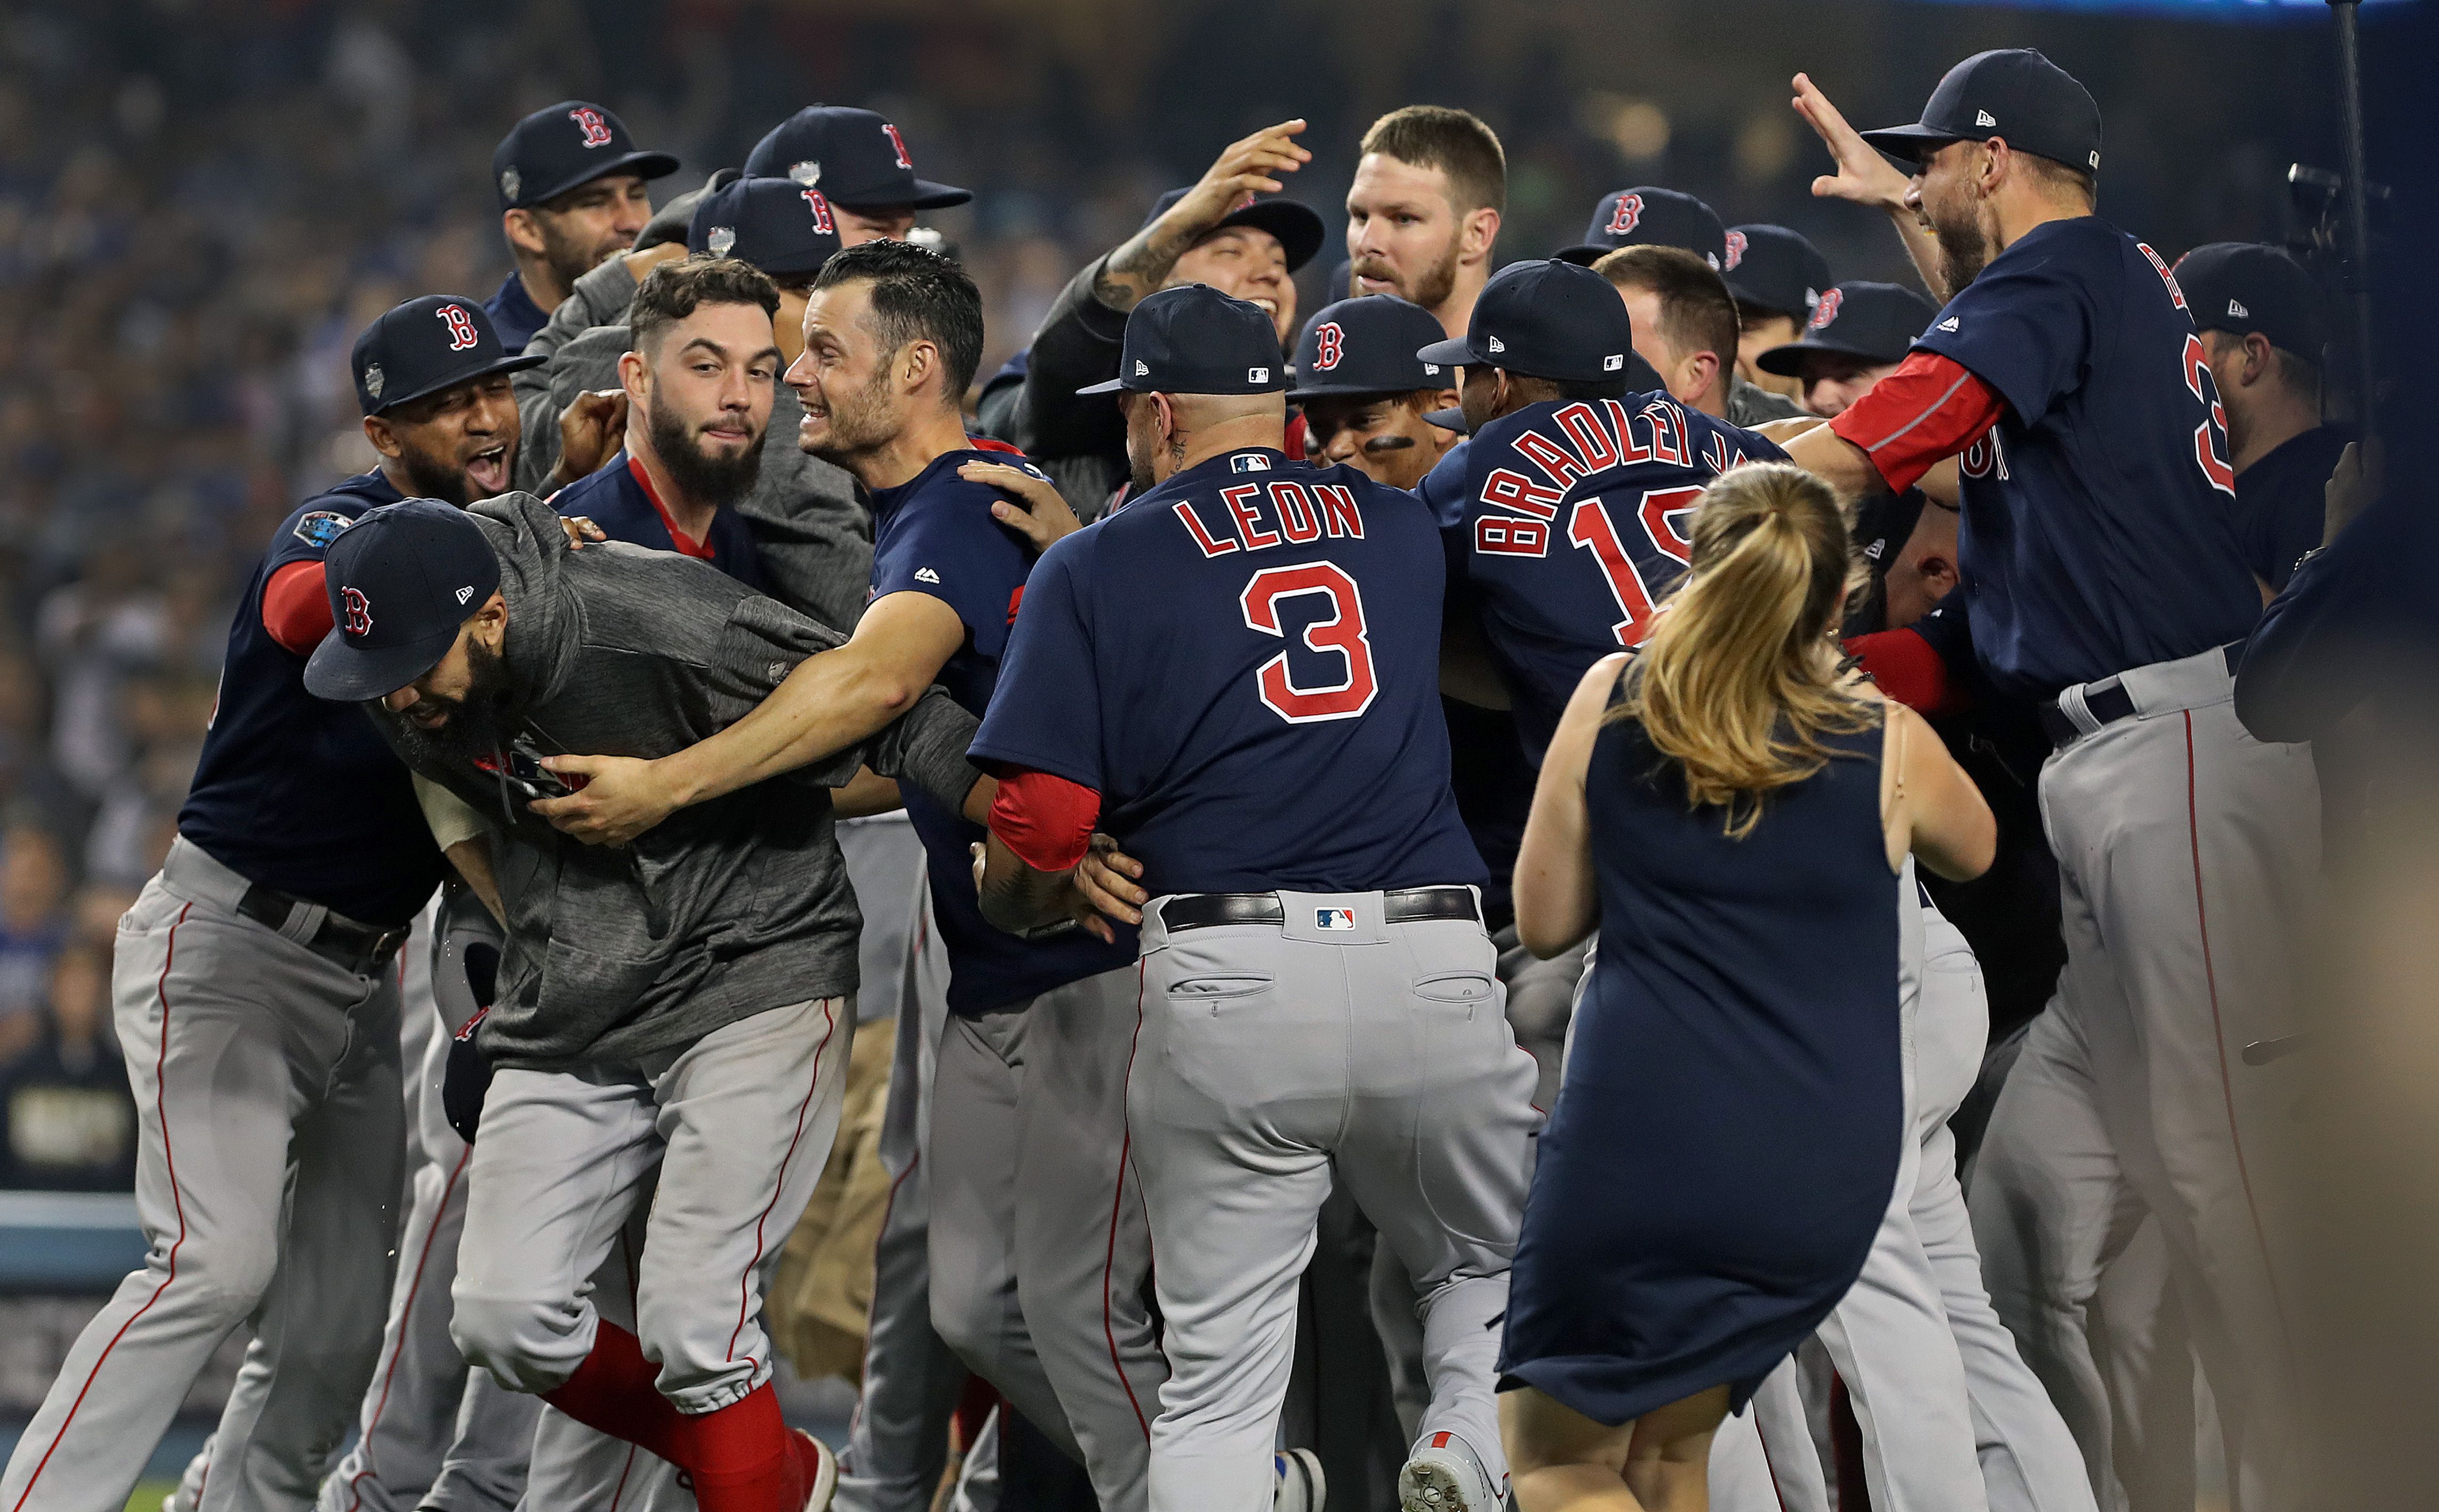 Boston Red Sox 2018 World Series Champions 24'' x 38'' Dynasty